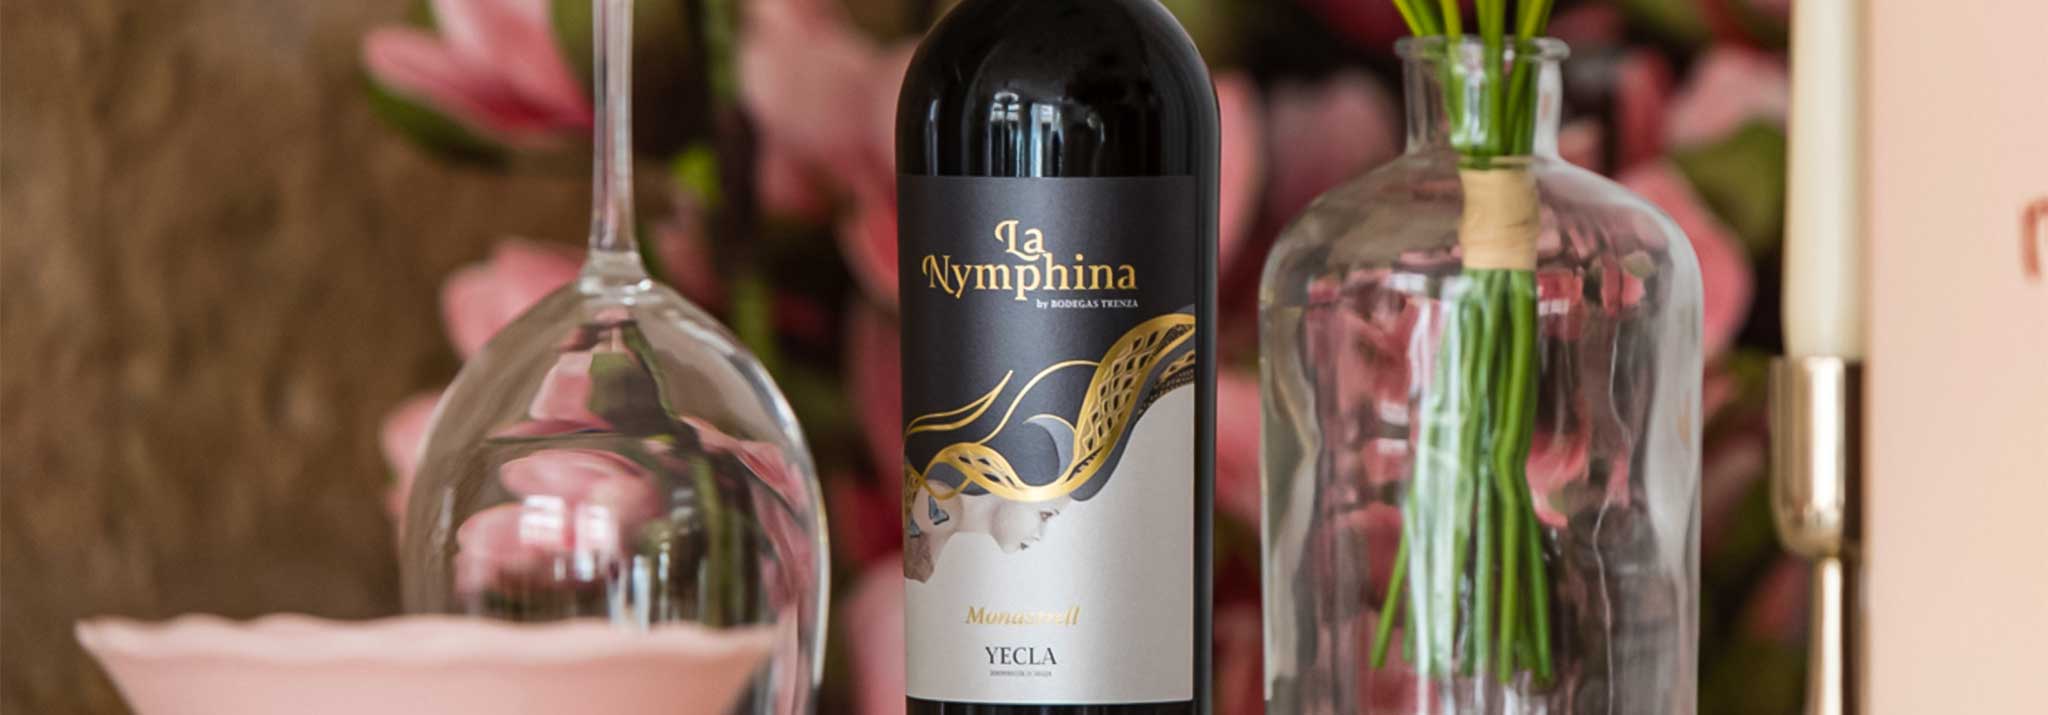 bodegas-trenza-nymphina-monastrell-spanish-wine